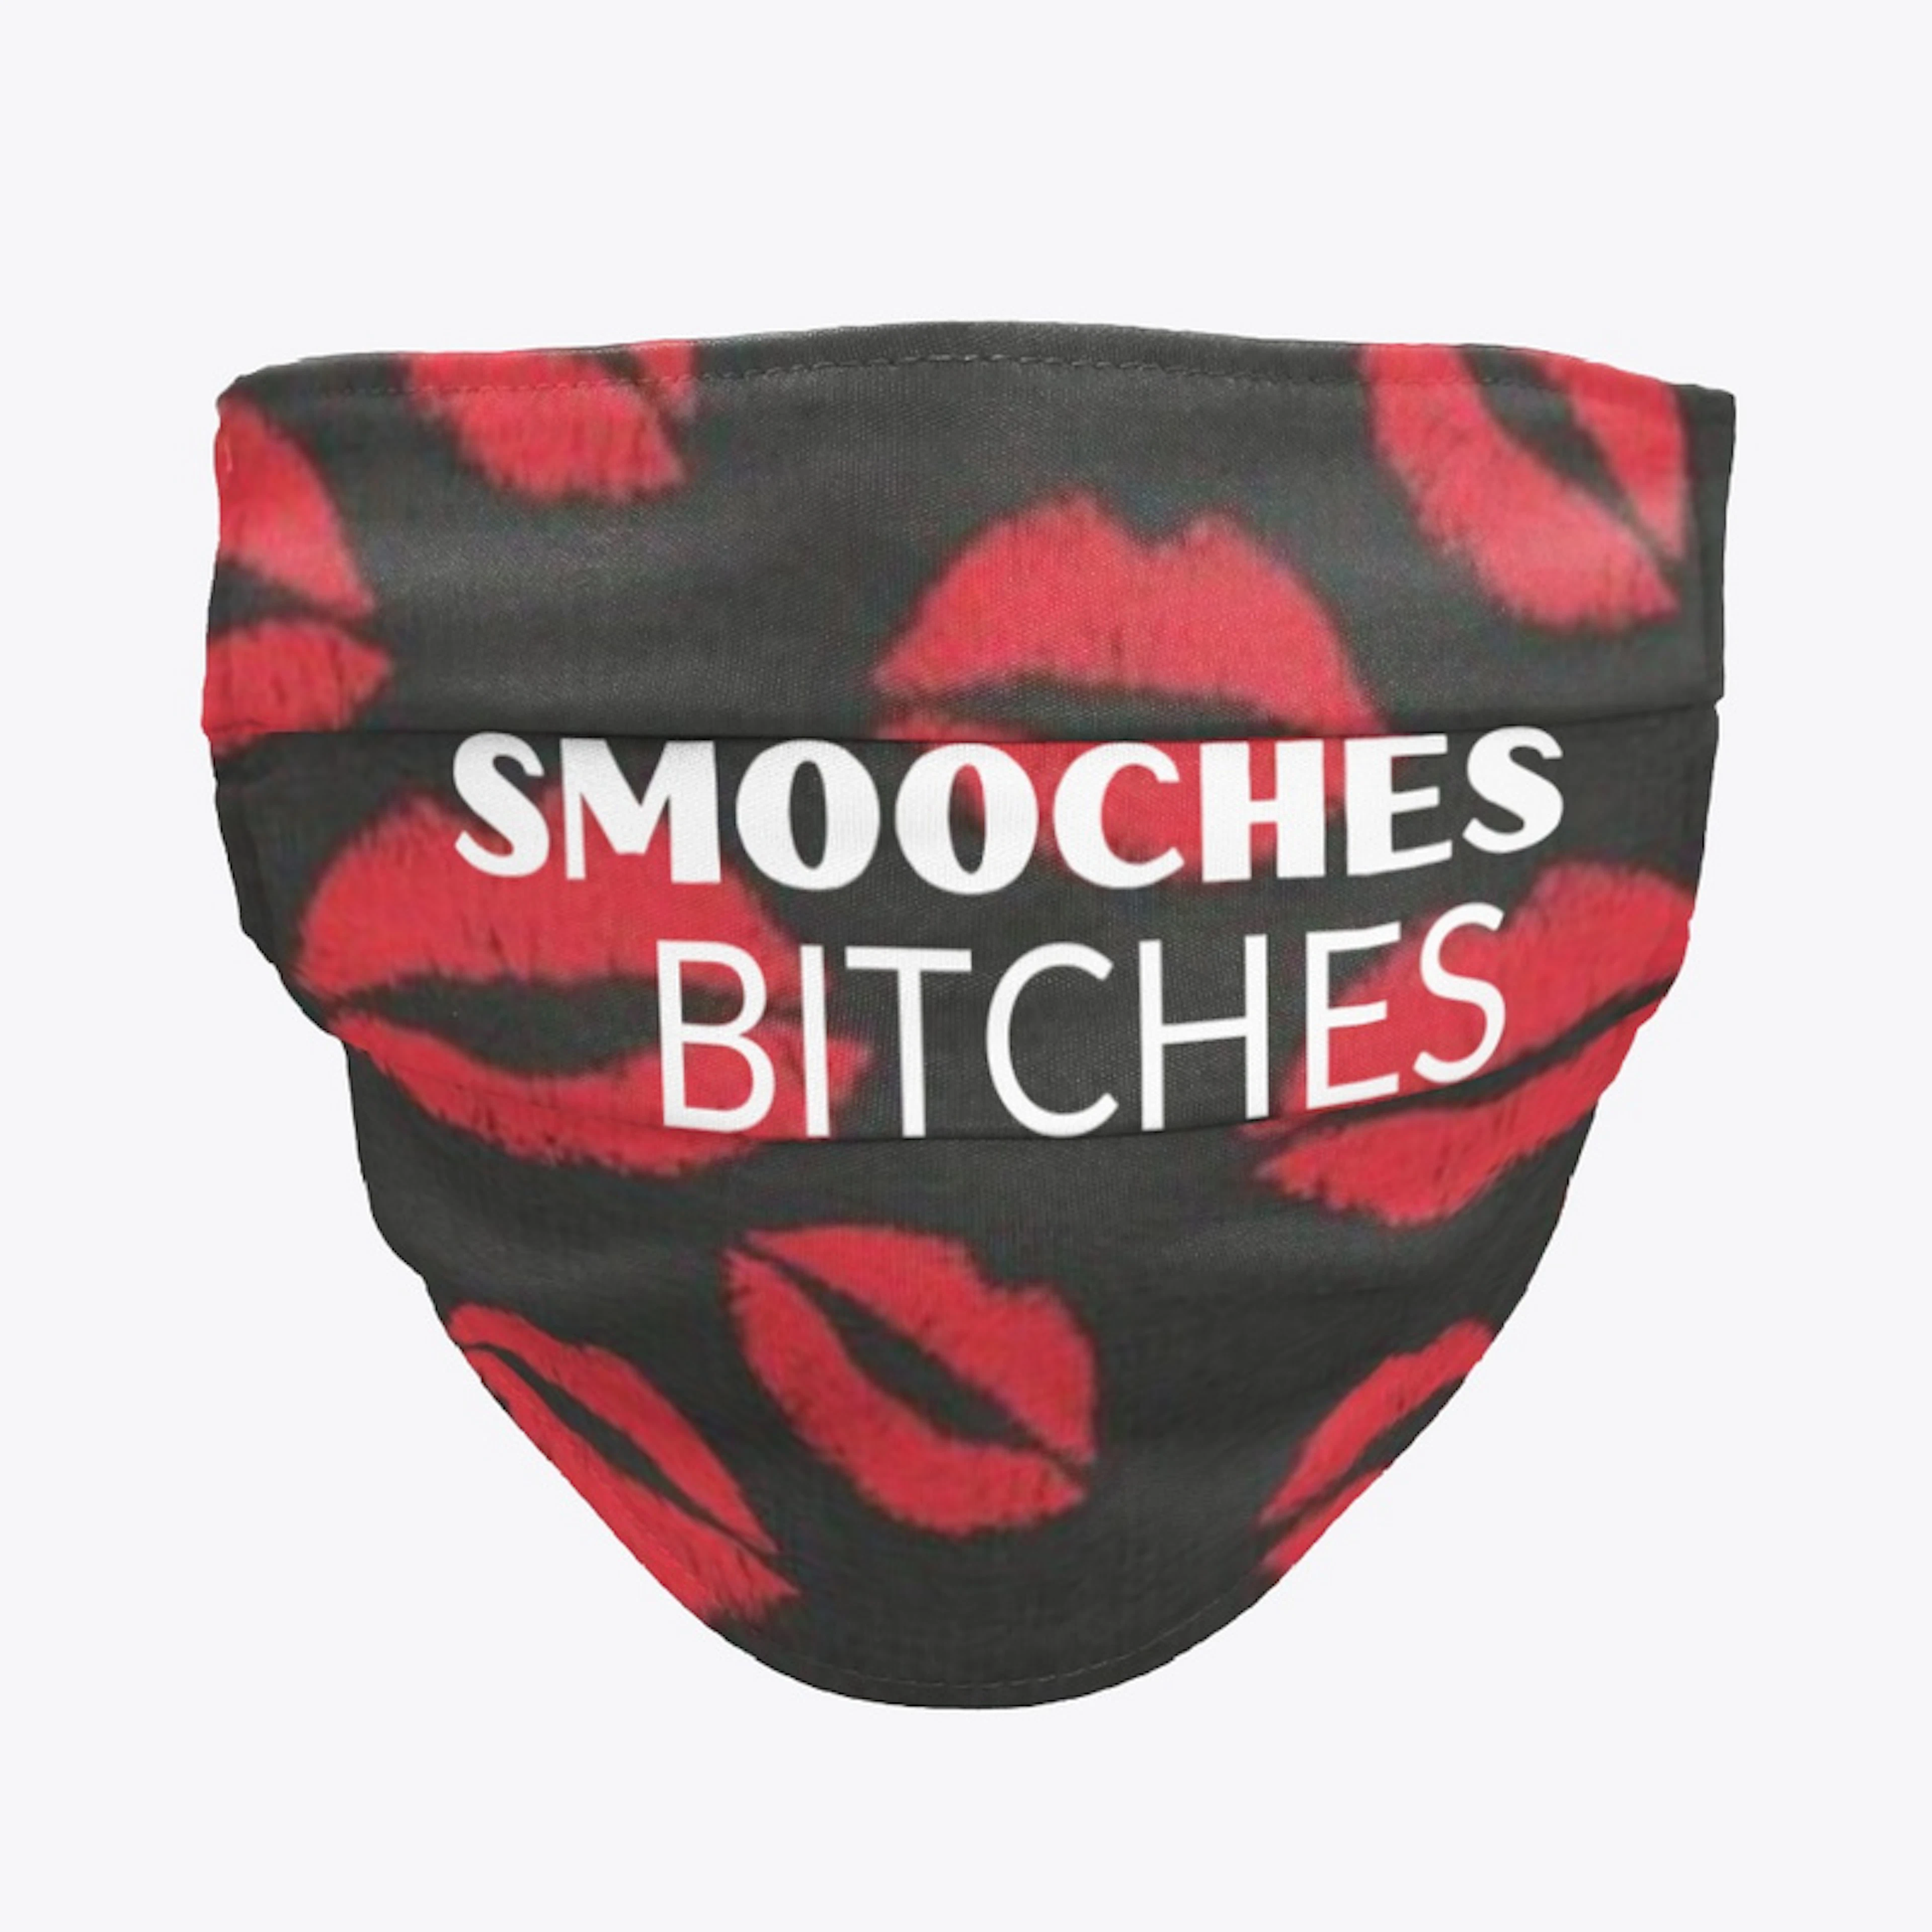 Smooches Bitches